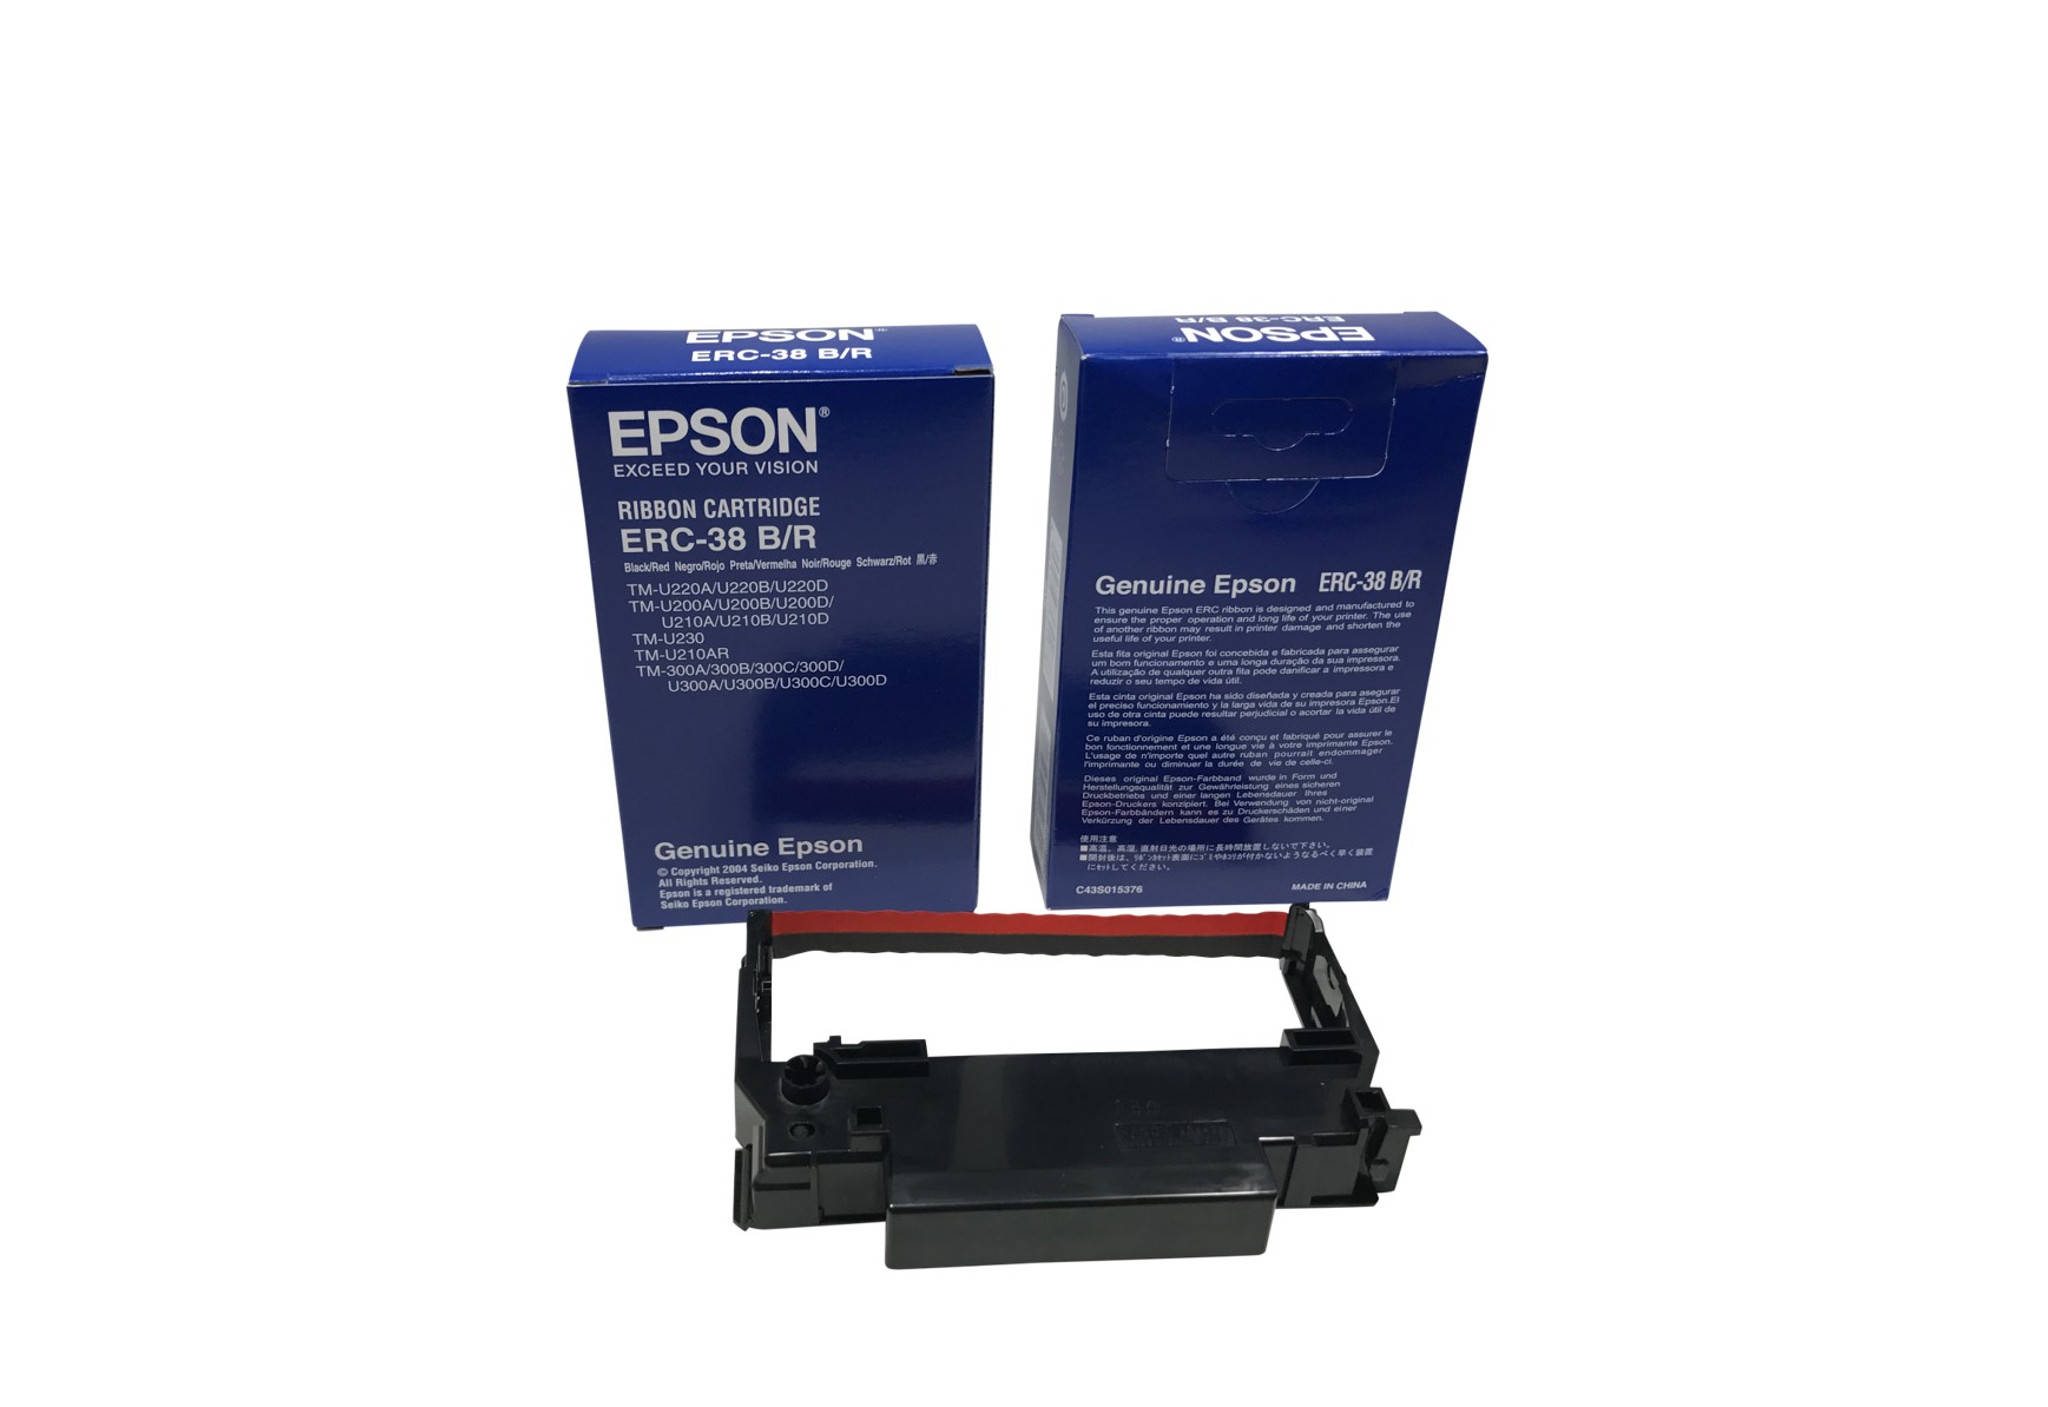 Epson ERC 30/34/38 Printer Ribbons - Black/Red